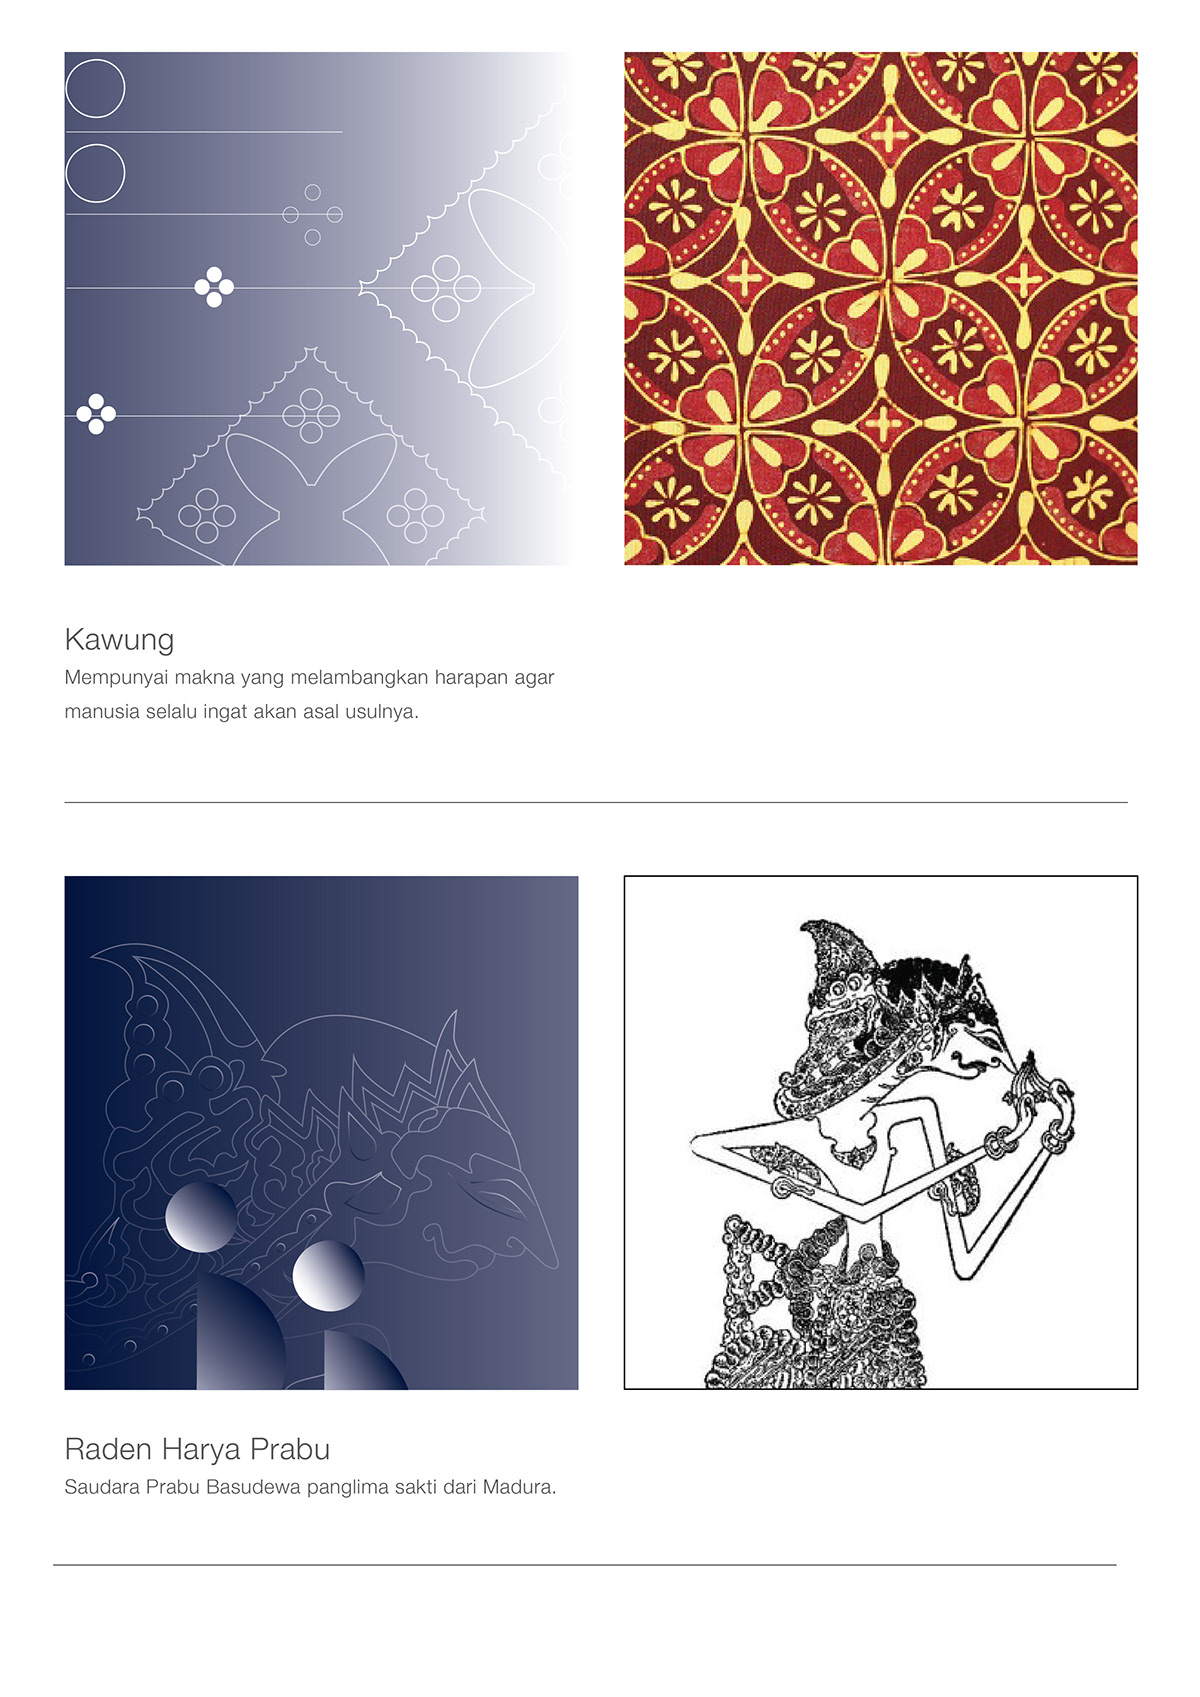 poster musicjazz jazz Exhibition  modern batik Wayang java pattern bauhauss braun grid minimalist